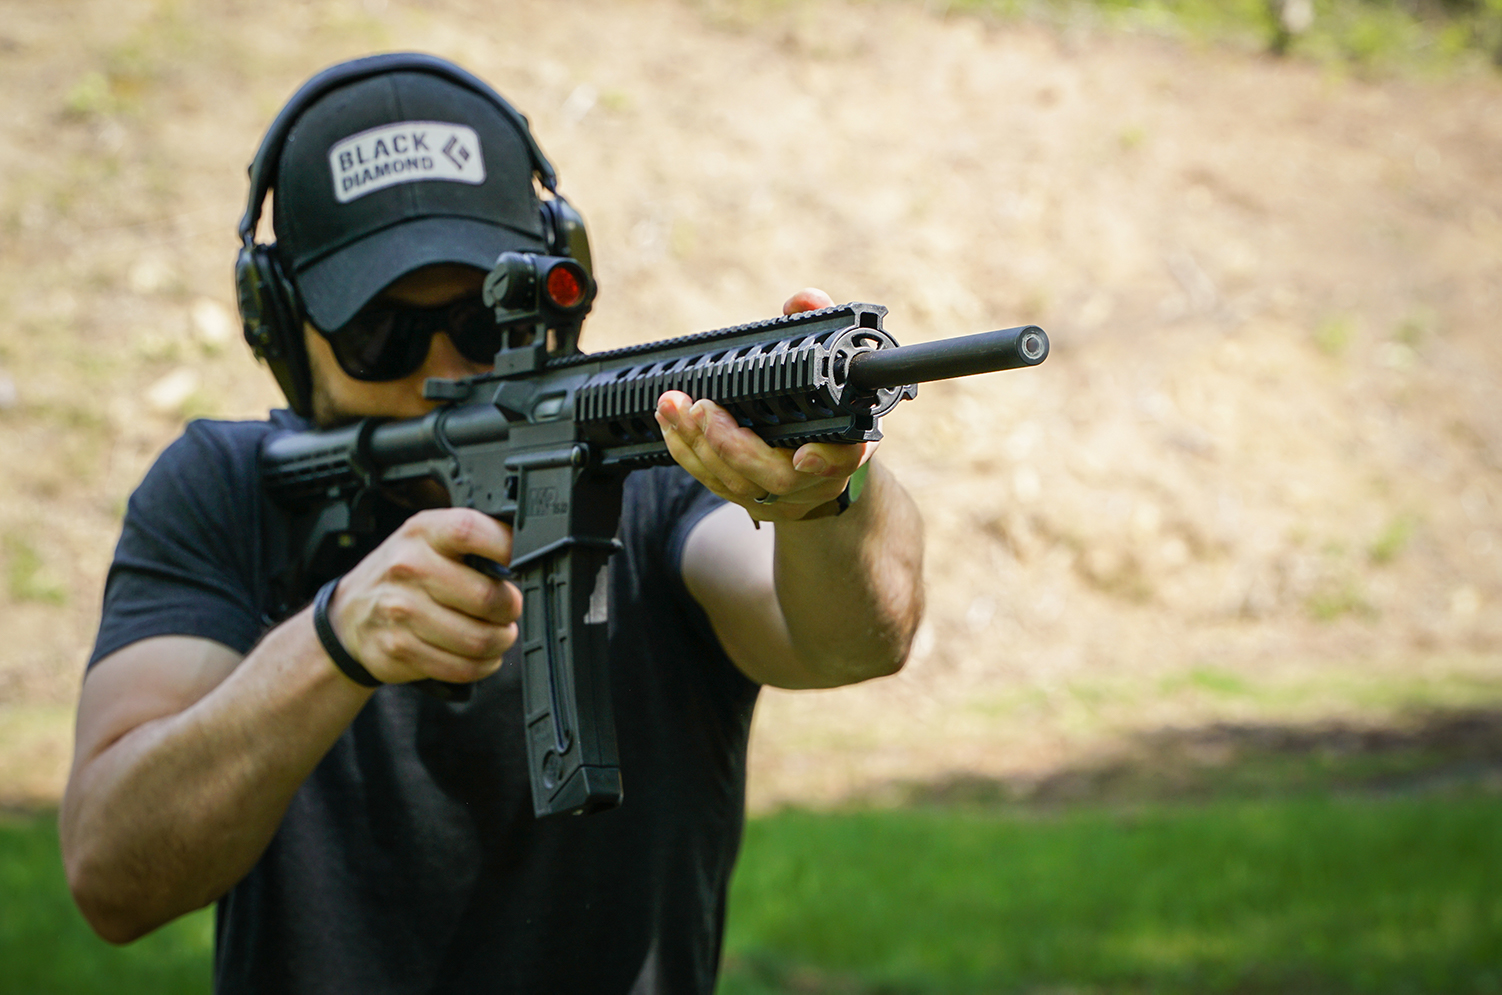 The author firing 22lr ammo through an AR-style rifle at a shooting range